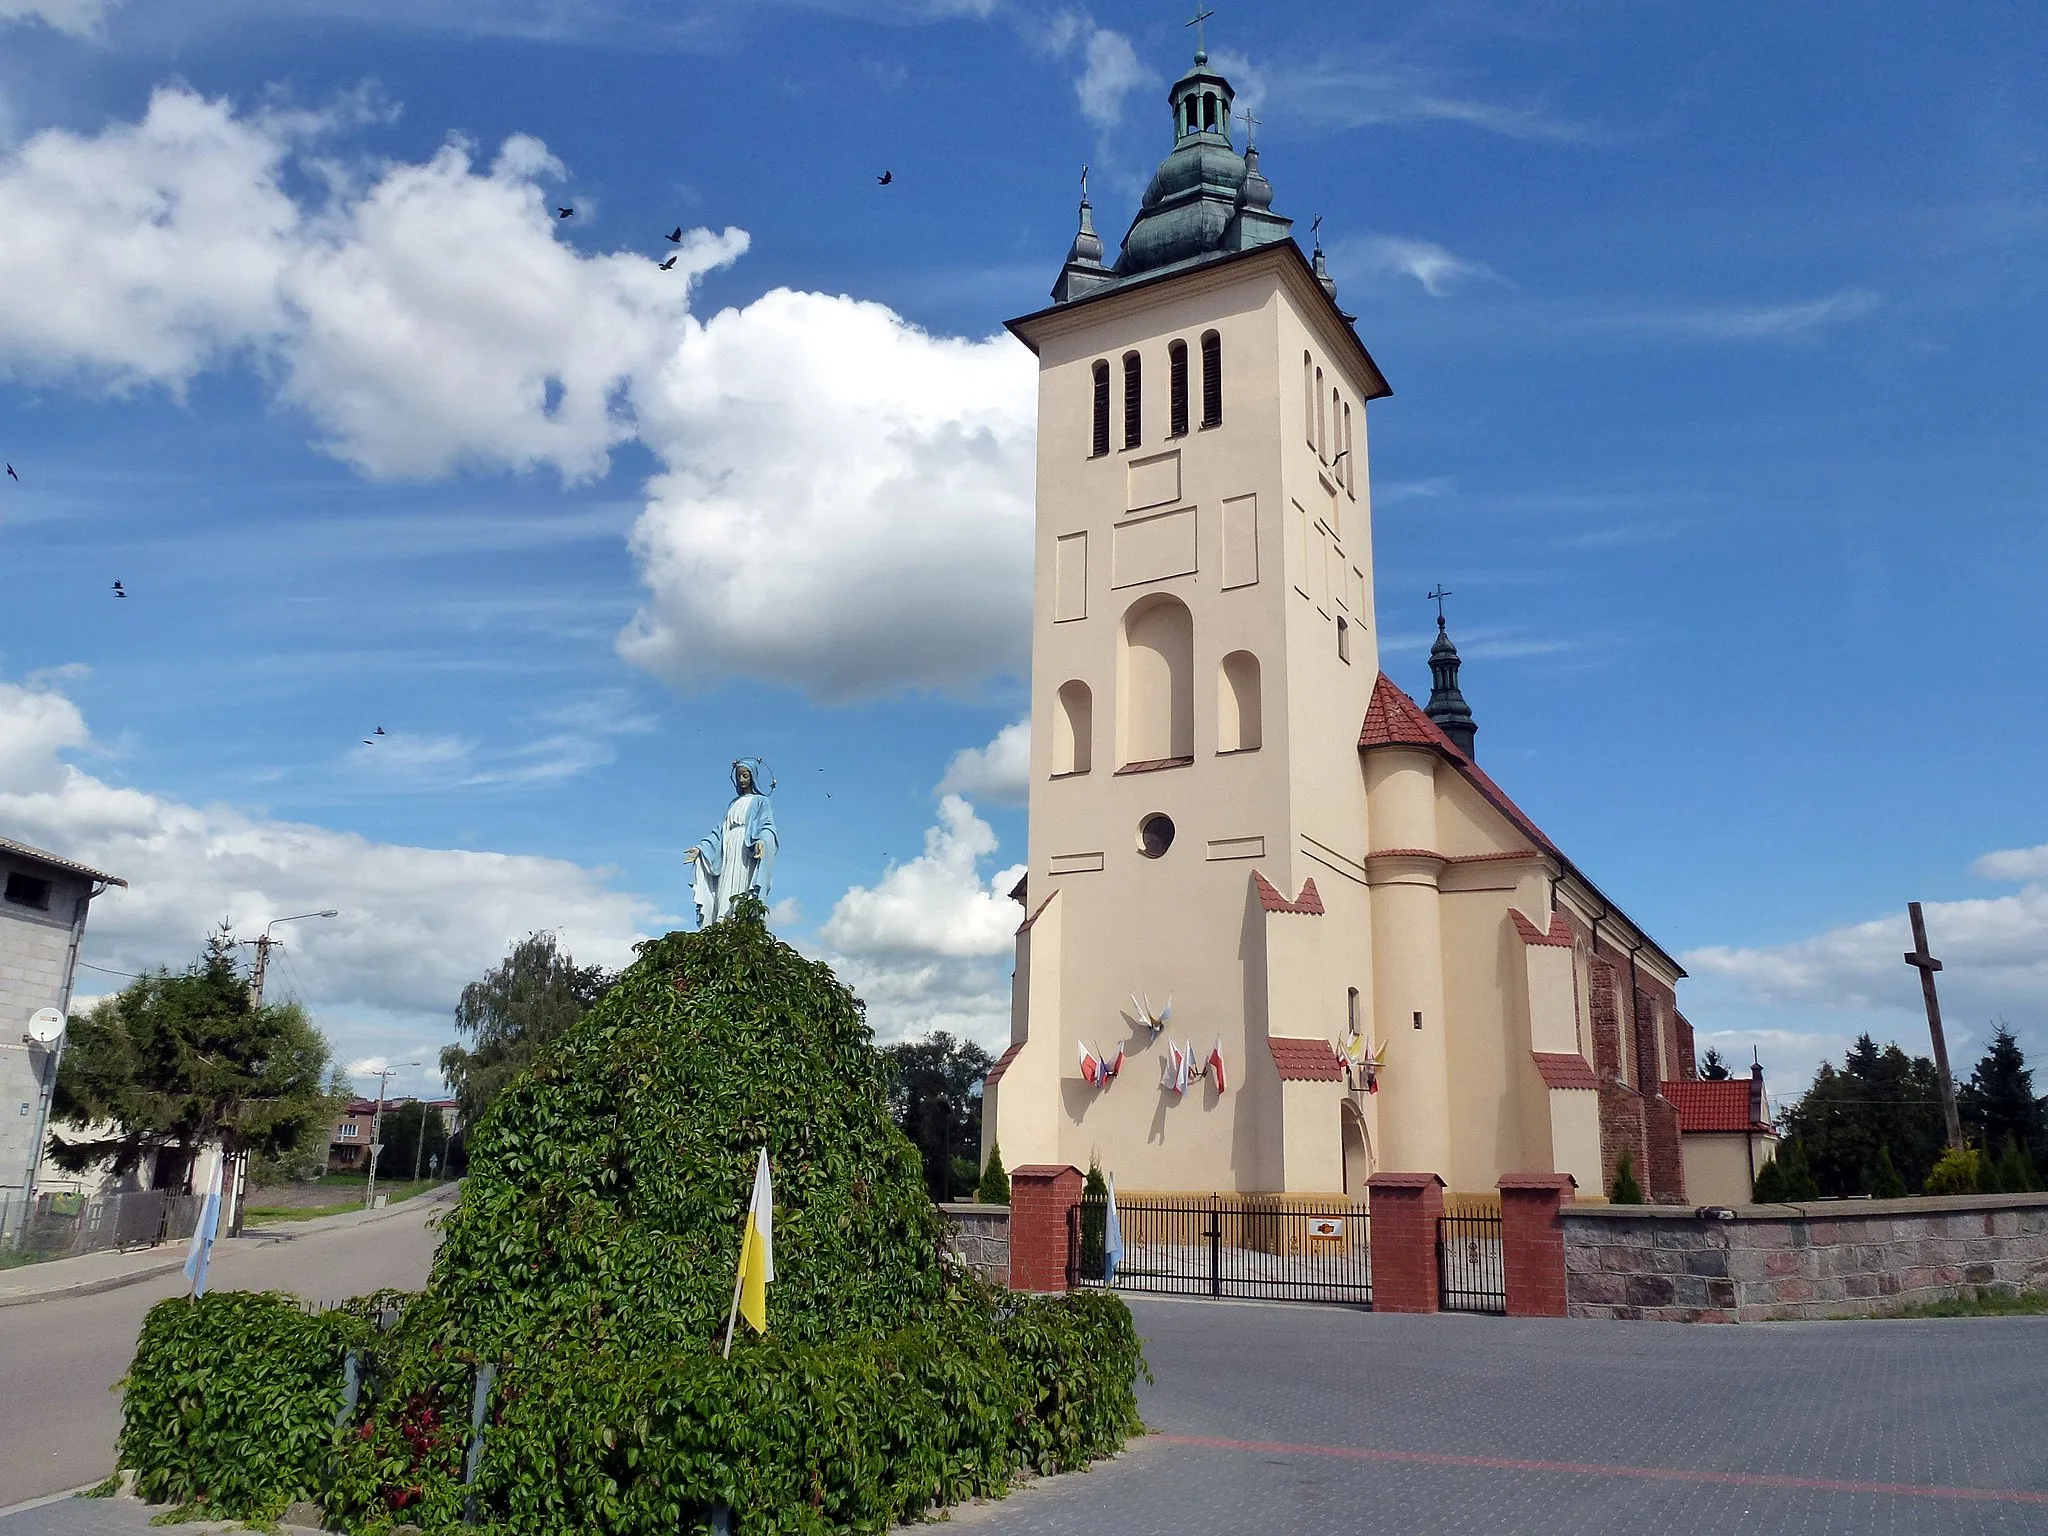 Photo showing: 16 century church in Krzynowloga Mala, Poland